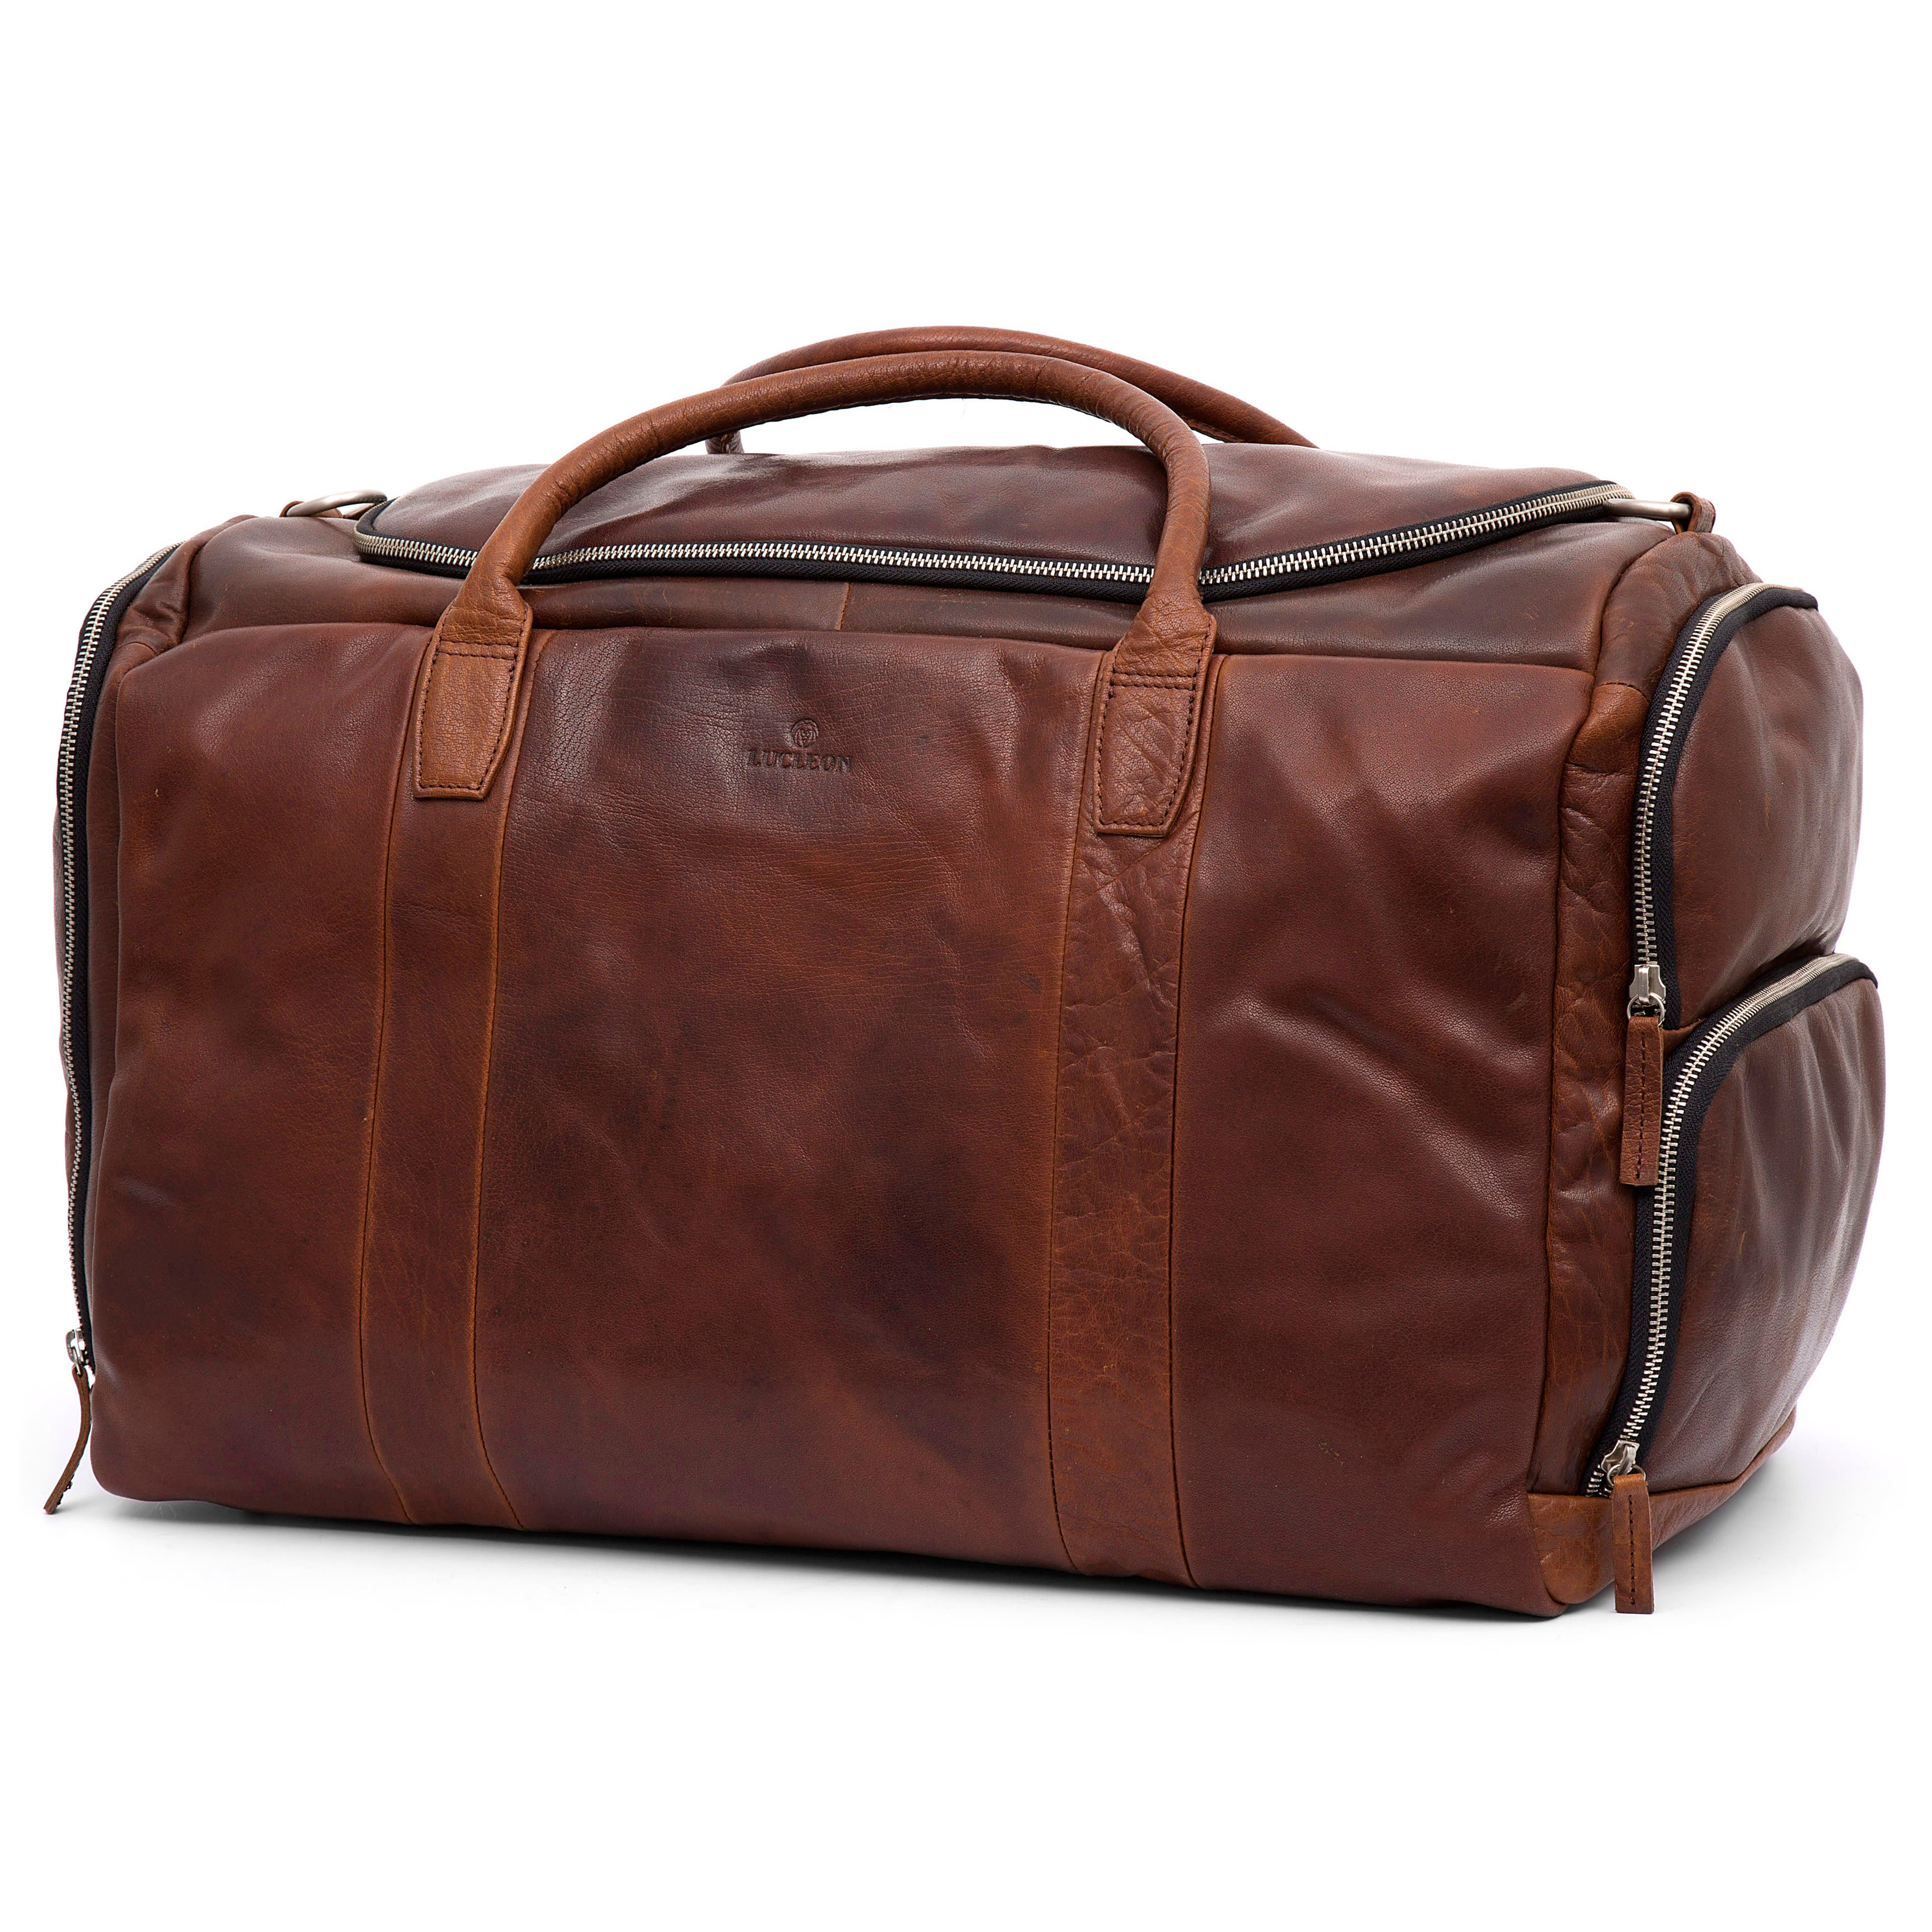 Montreal Large Tan Leather Duffel Bag, In stock!